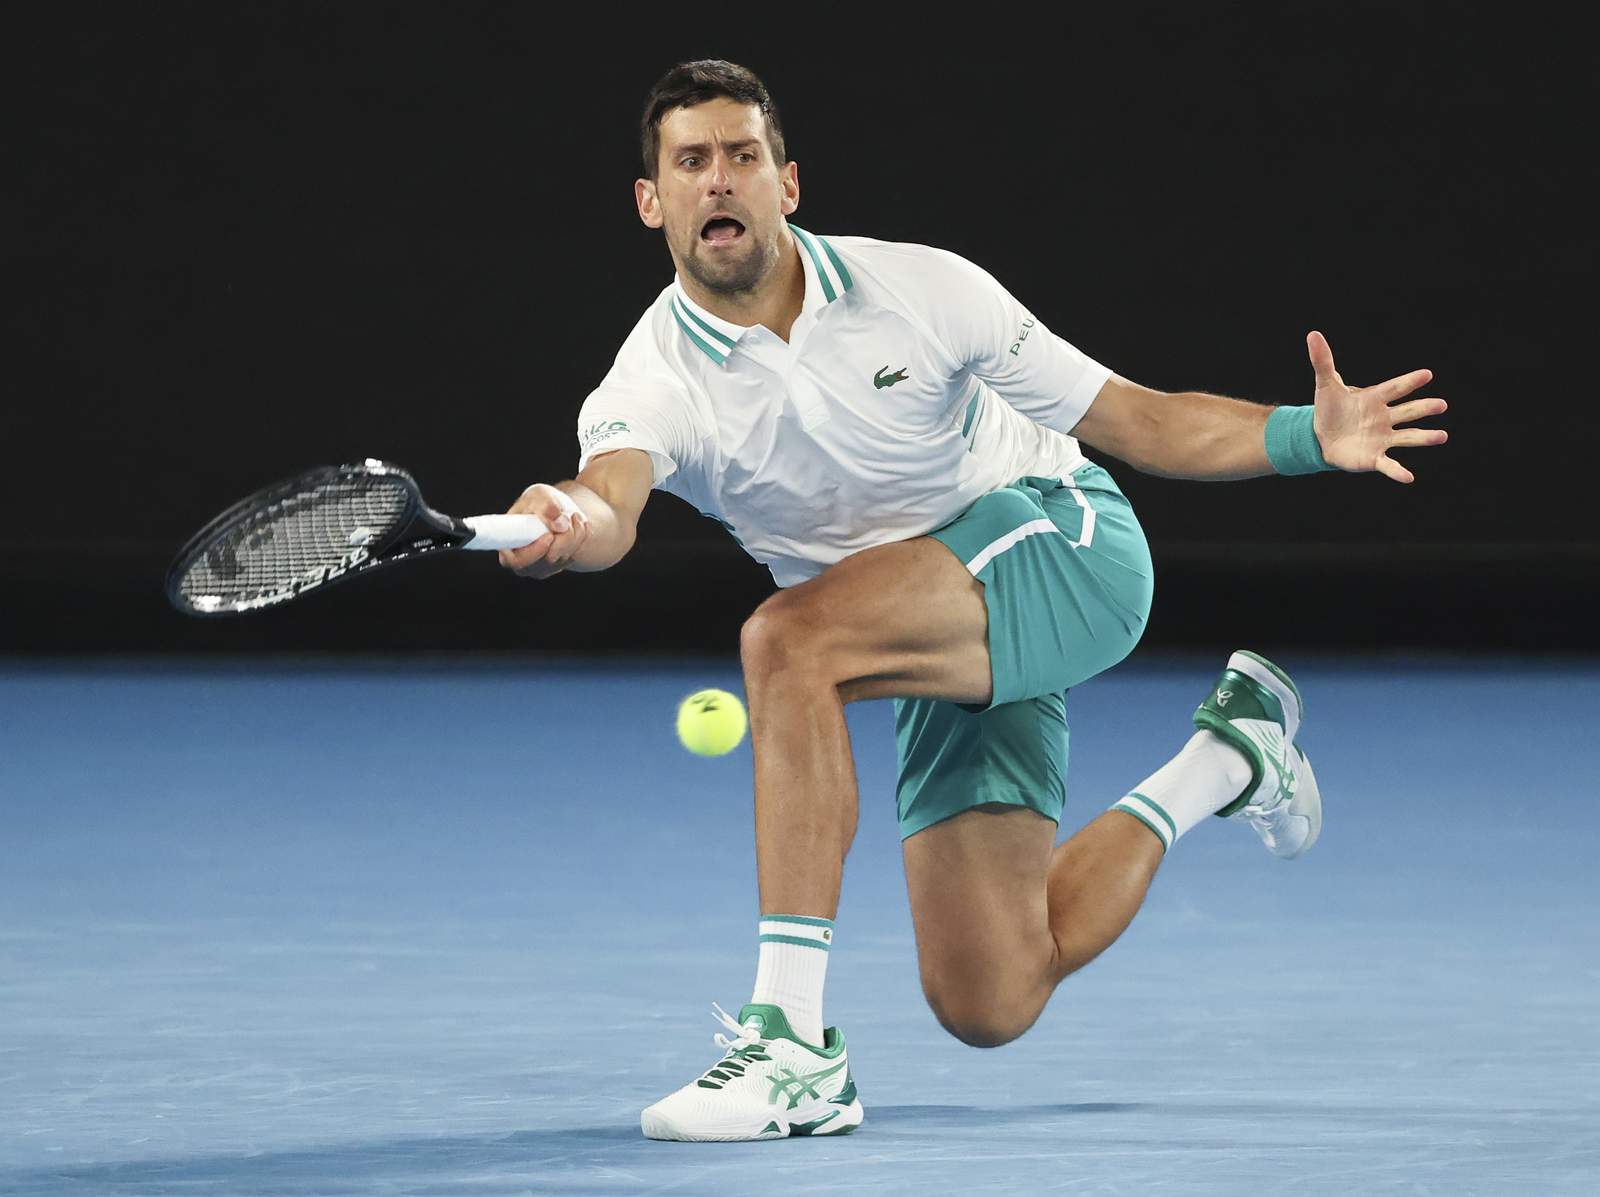 The Latest: Djokovic beats Raonic, reaches QFs in Australia